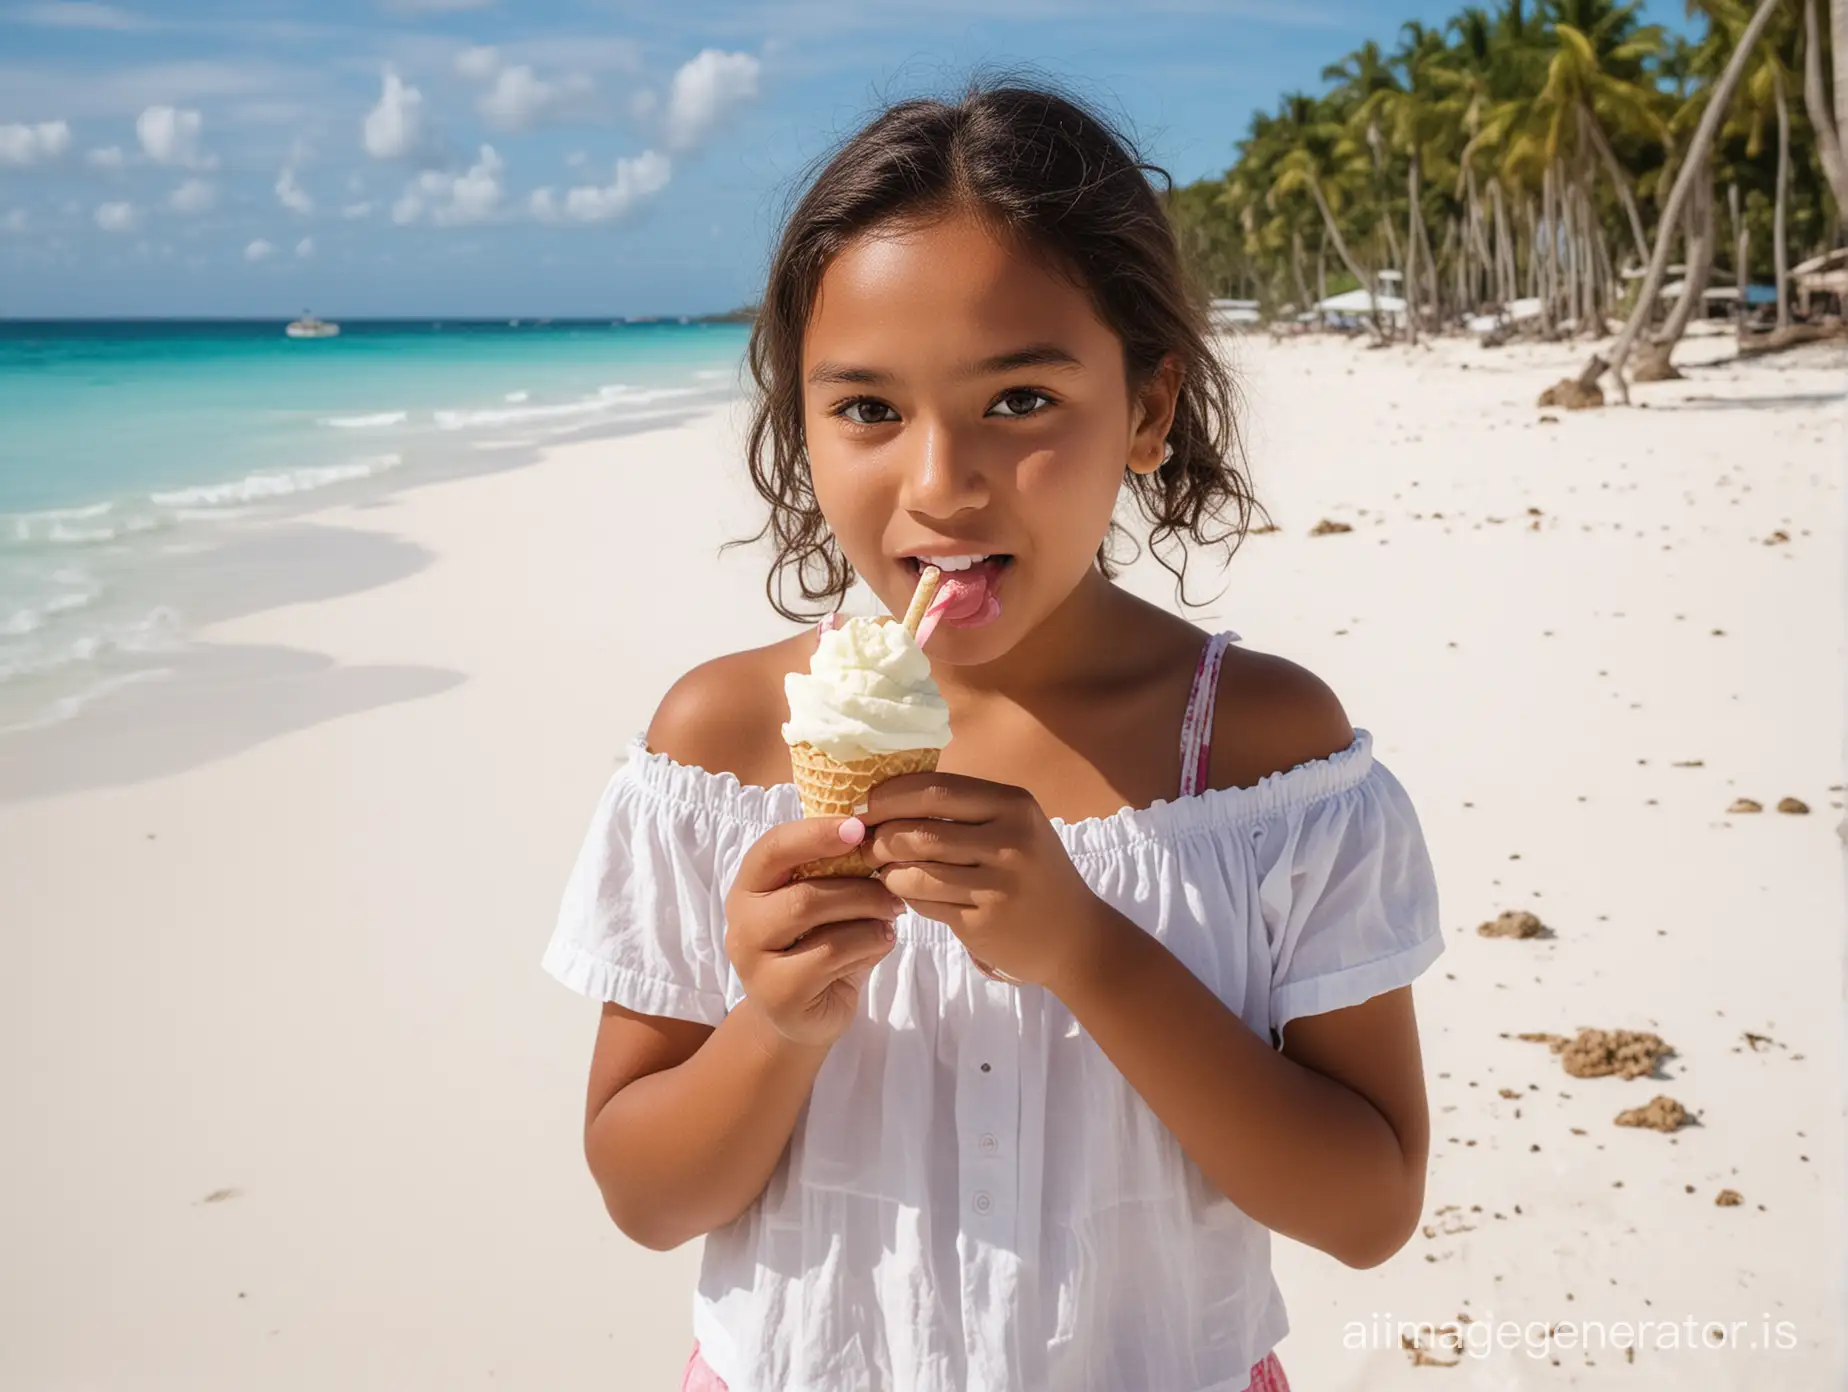 Moluccan schoolgirl on white beach eating icecream